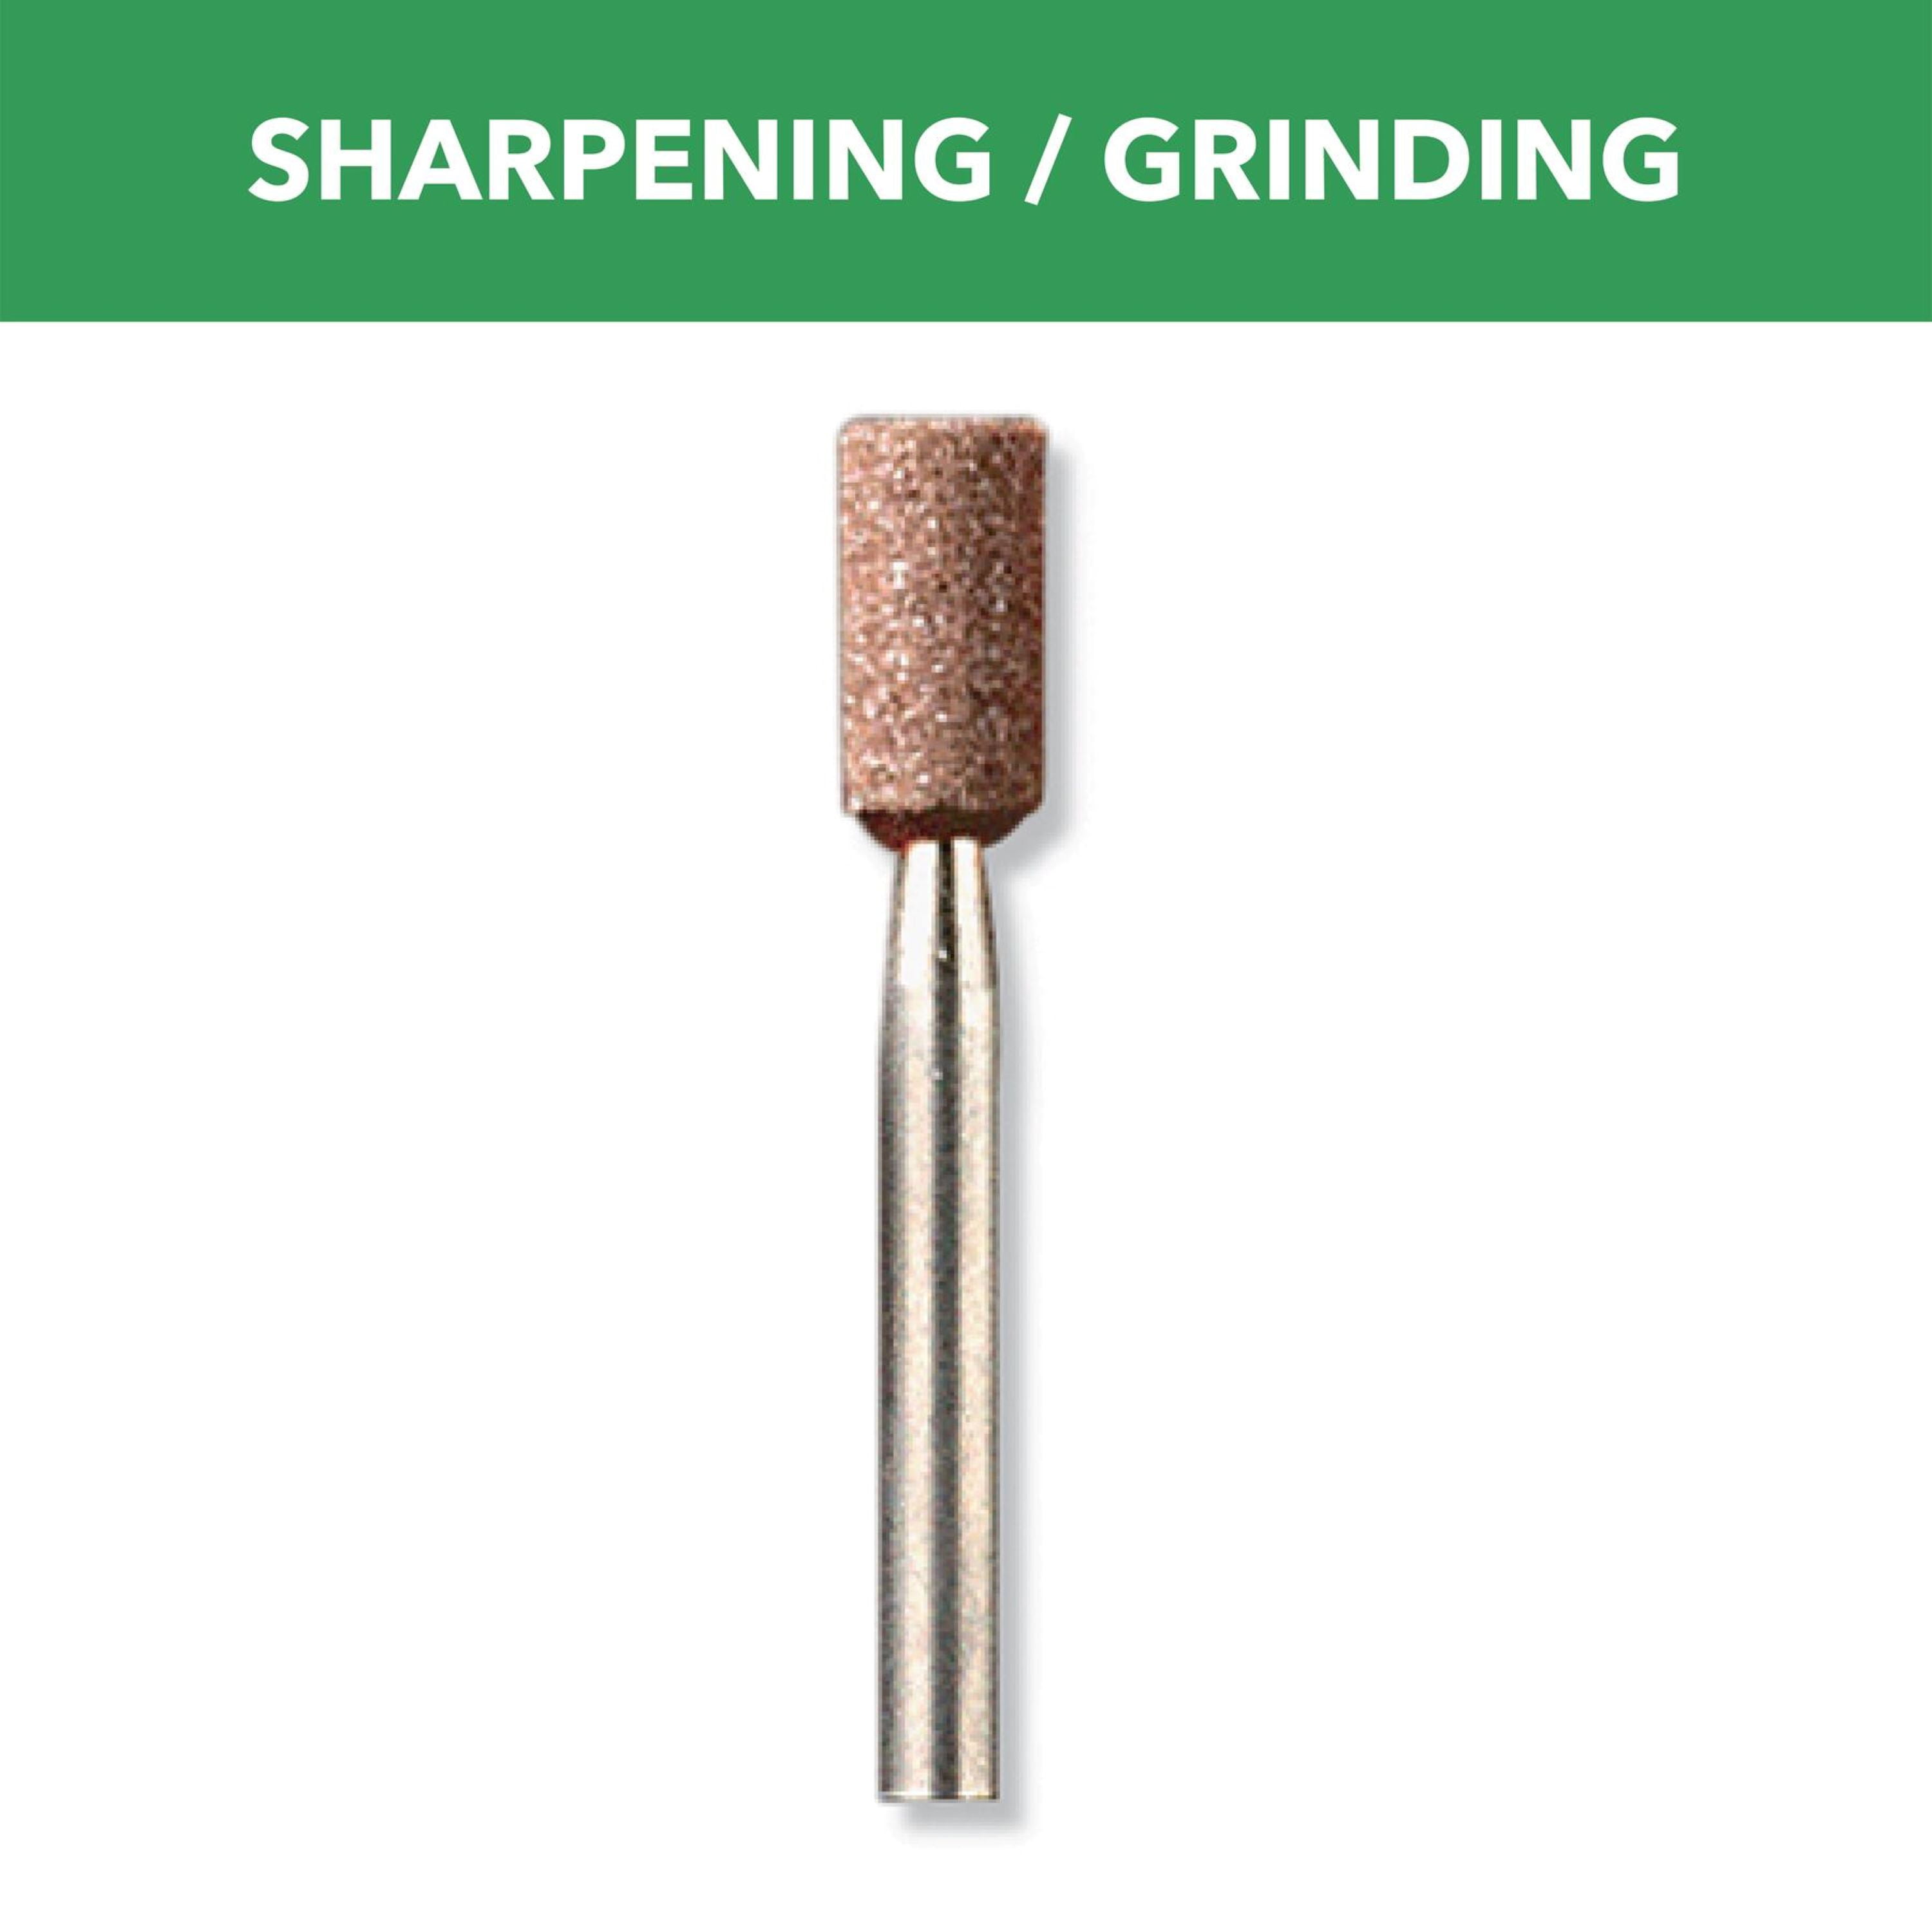 Dremel Accessory 8153: Grinding-Sharpening - Aluminum Oxide